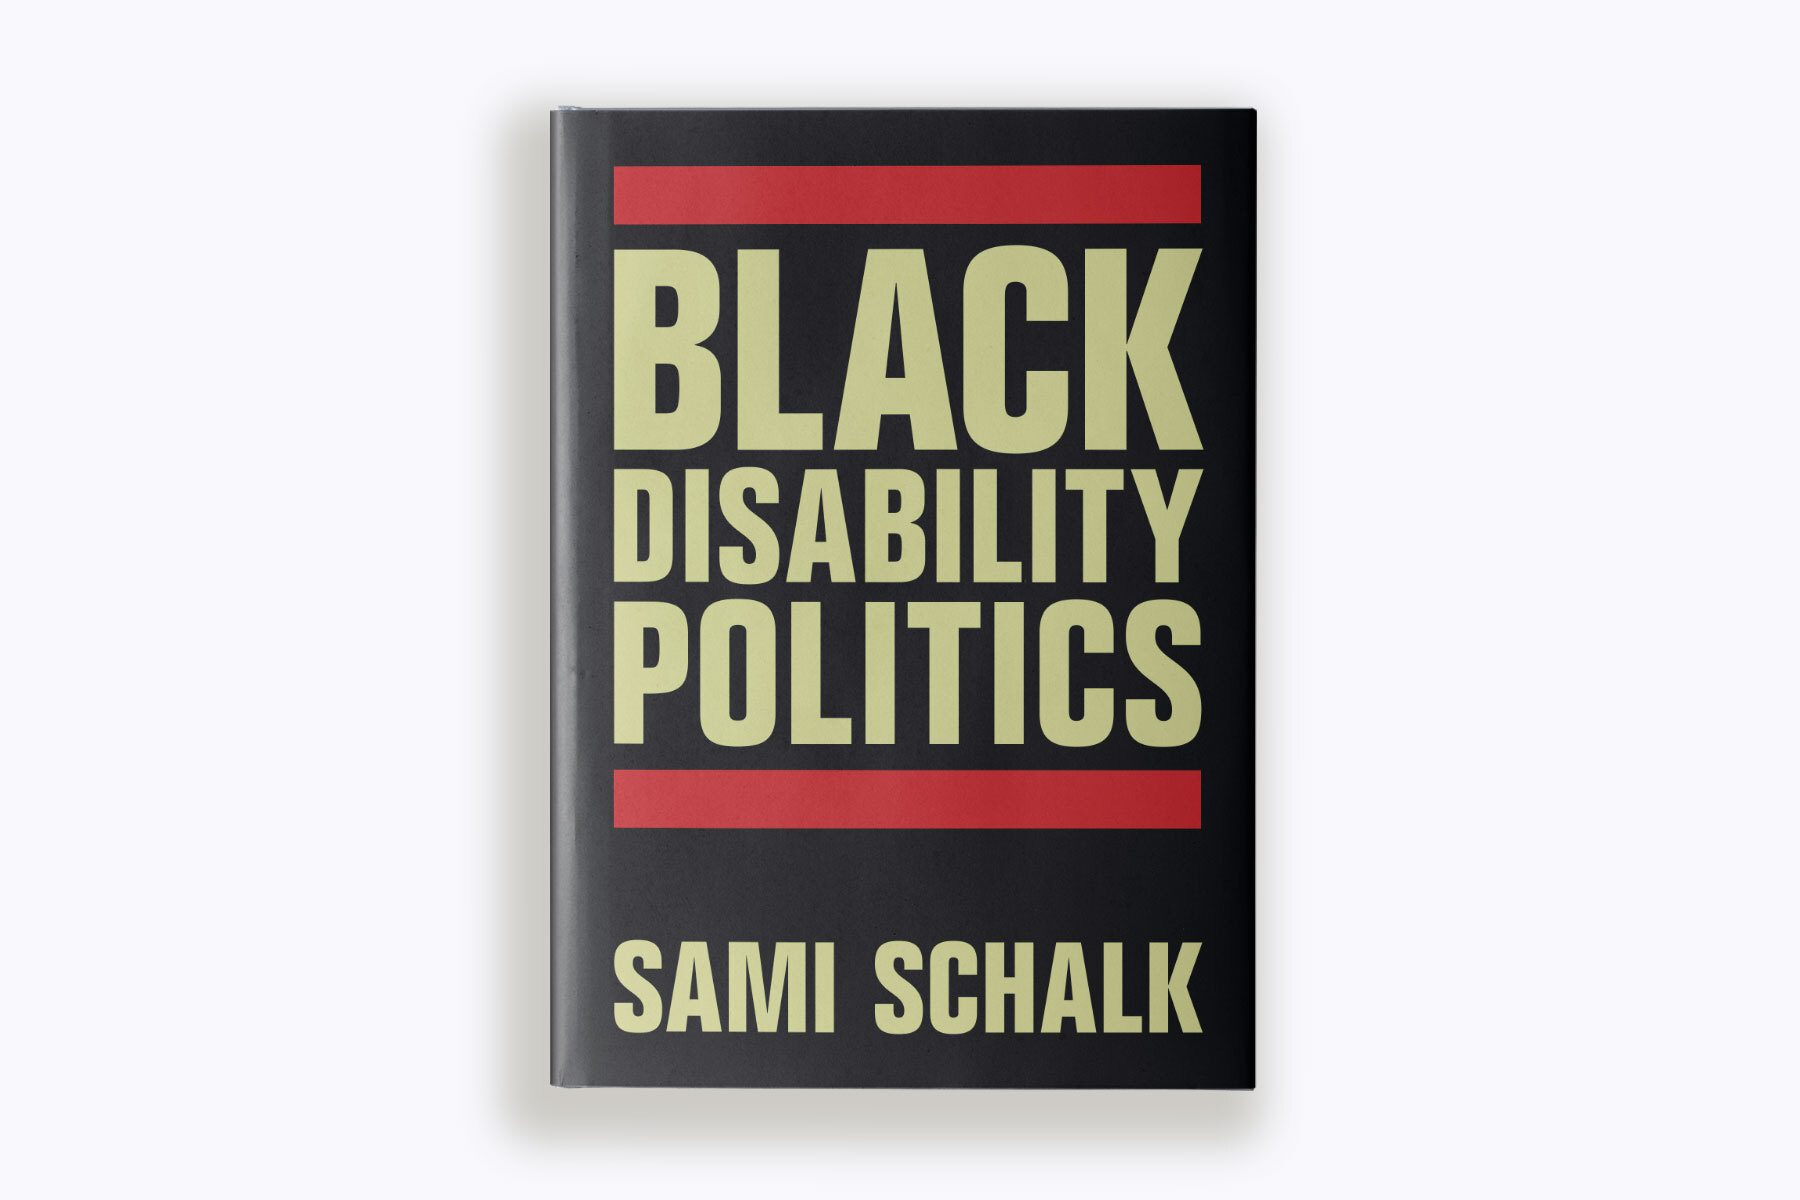 Cover of "Black Disability Politics" by Sami Schalk